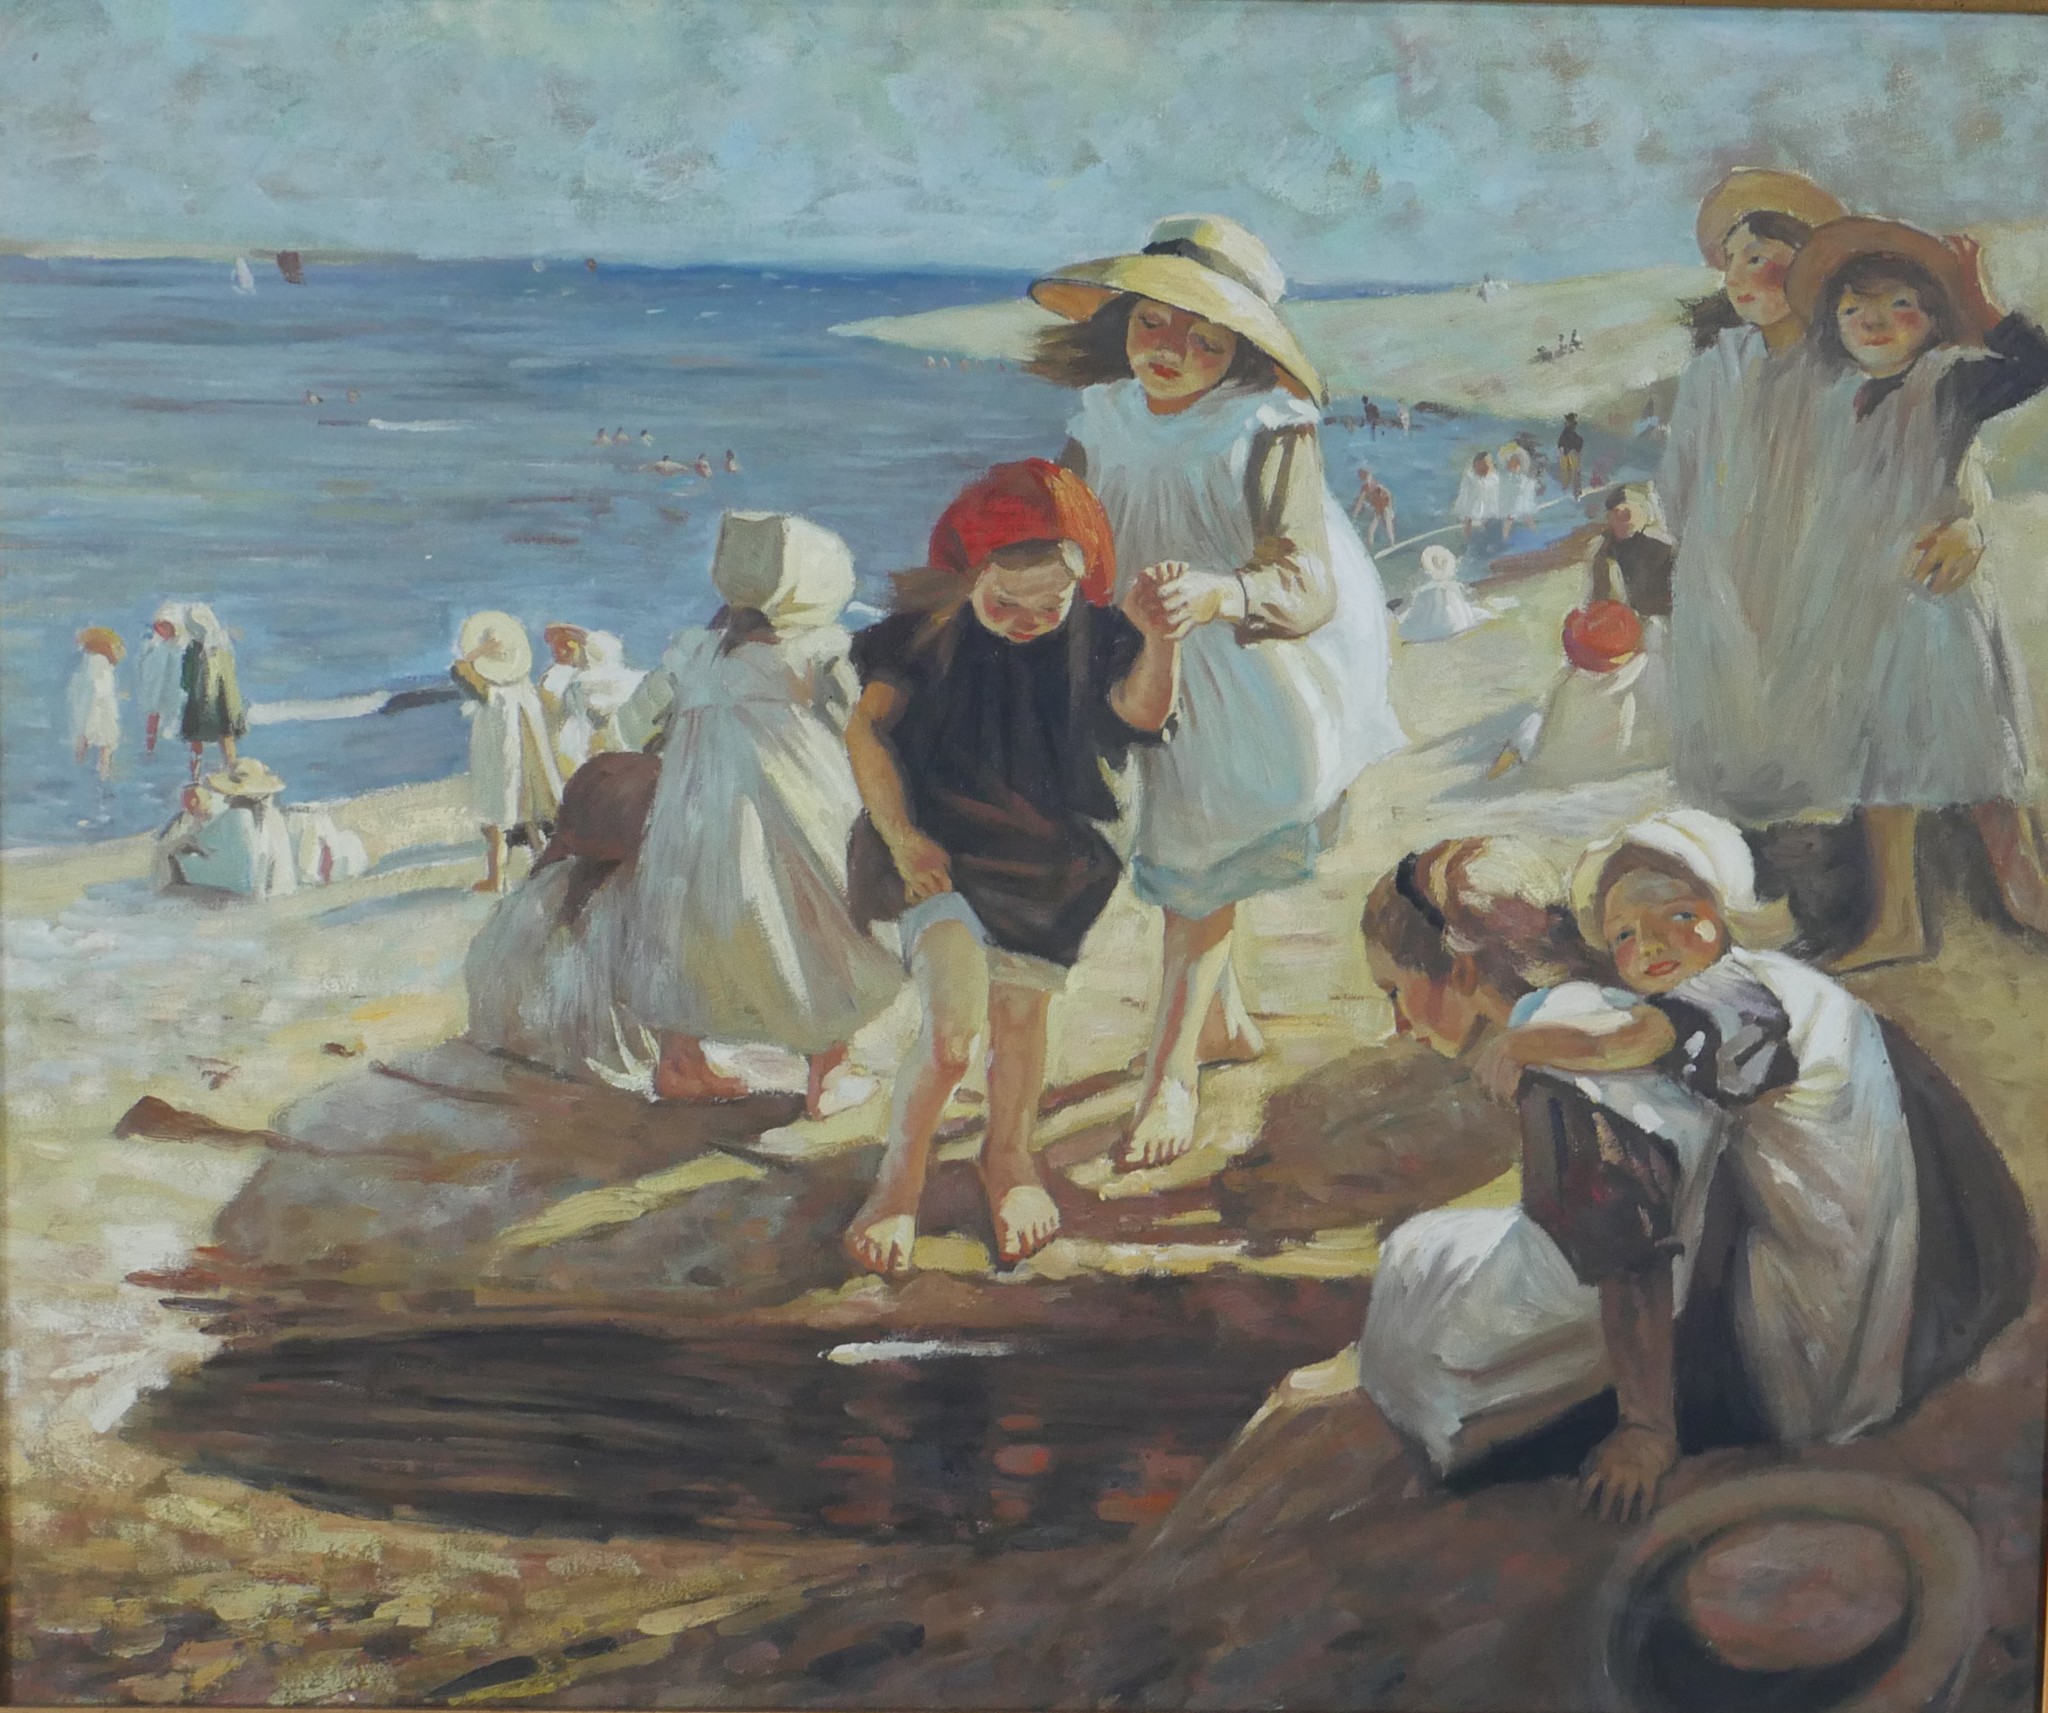 20th century, British school, children playing on the beach, oil on board, gilt framed. H.76 W.86cm